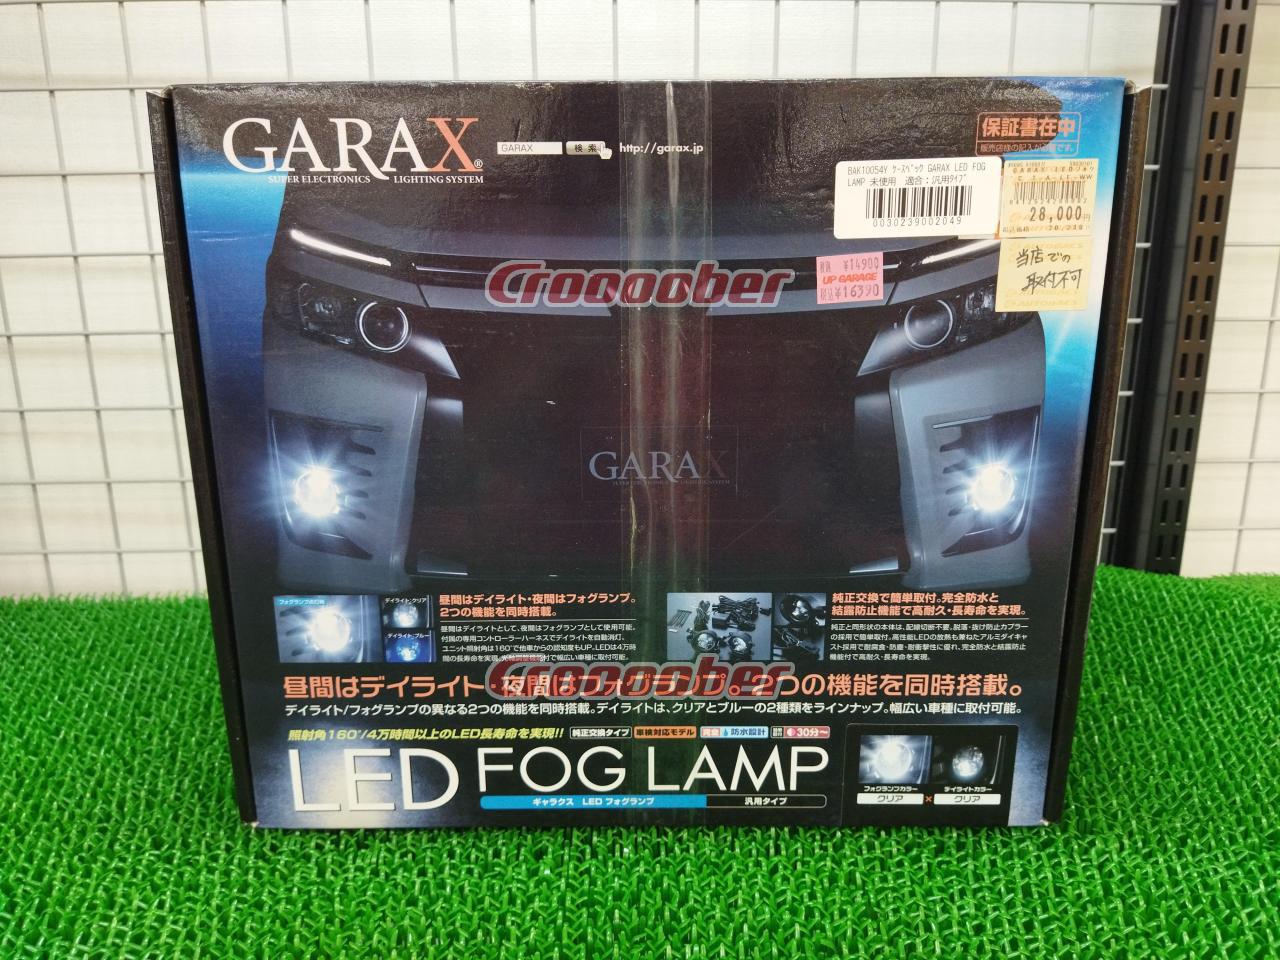 Cable Specs GARAX LED FOG LAMP T-A-LF-WW2022.02 Price Cuts! | LED